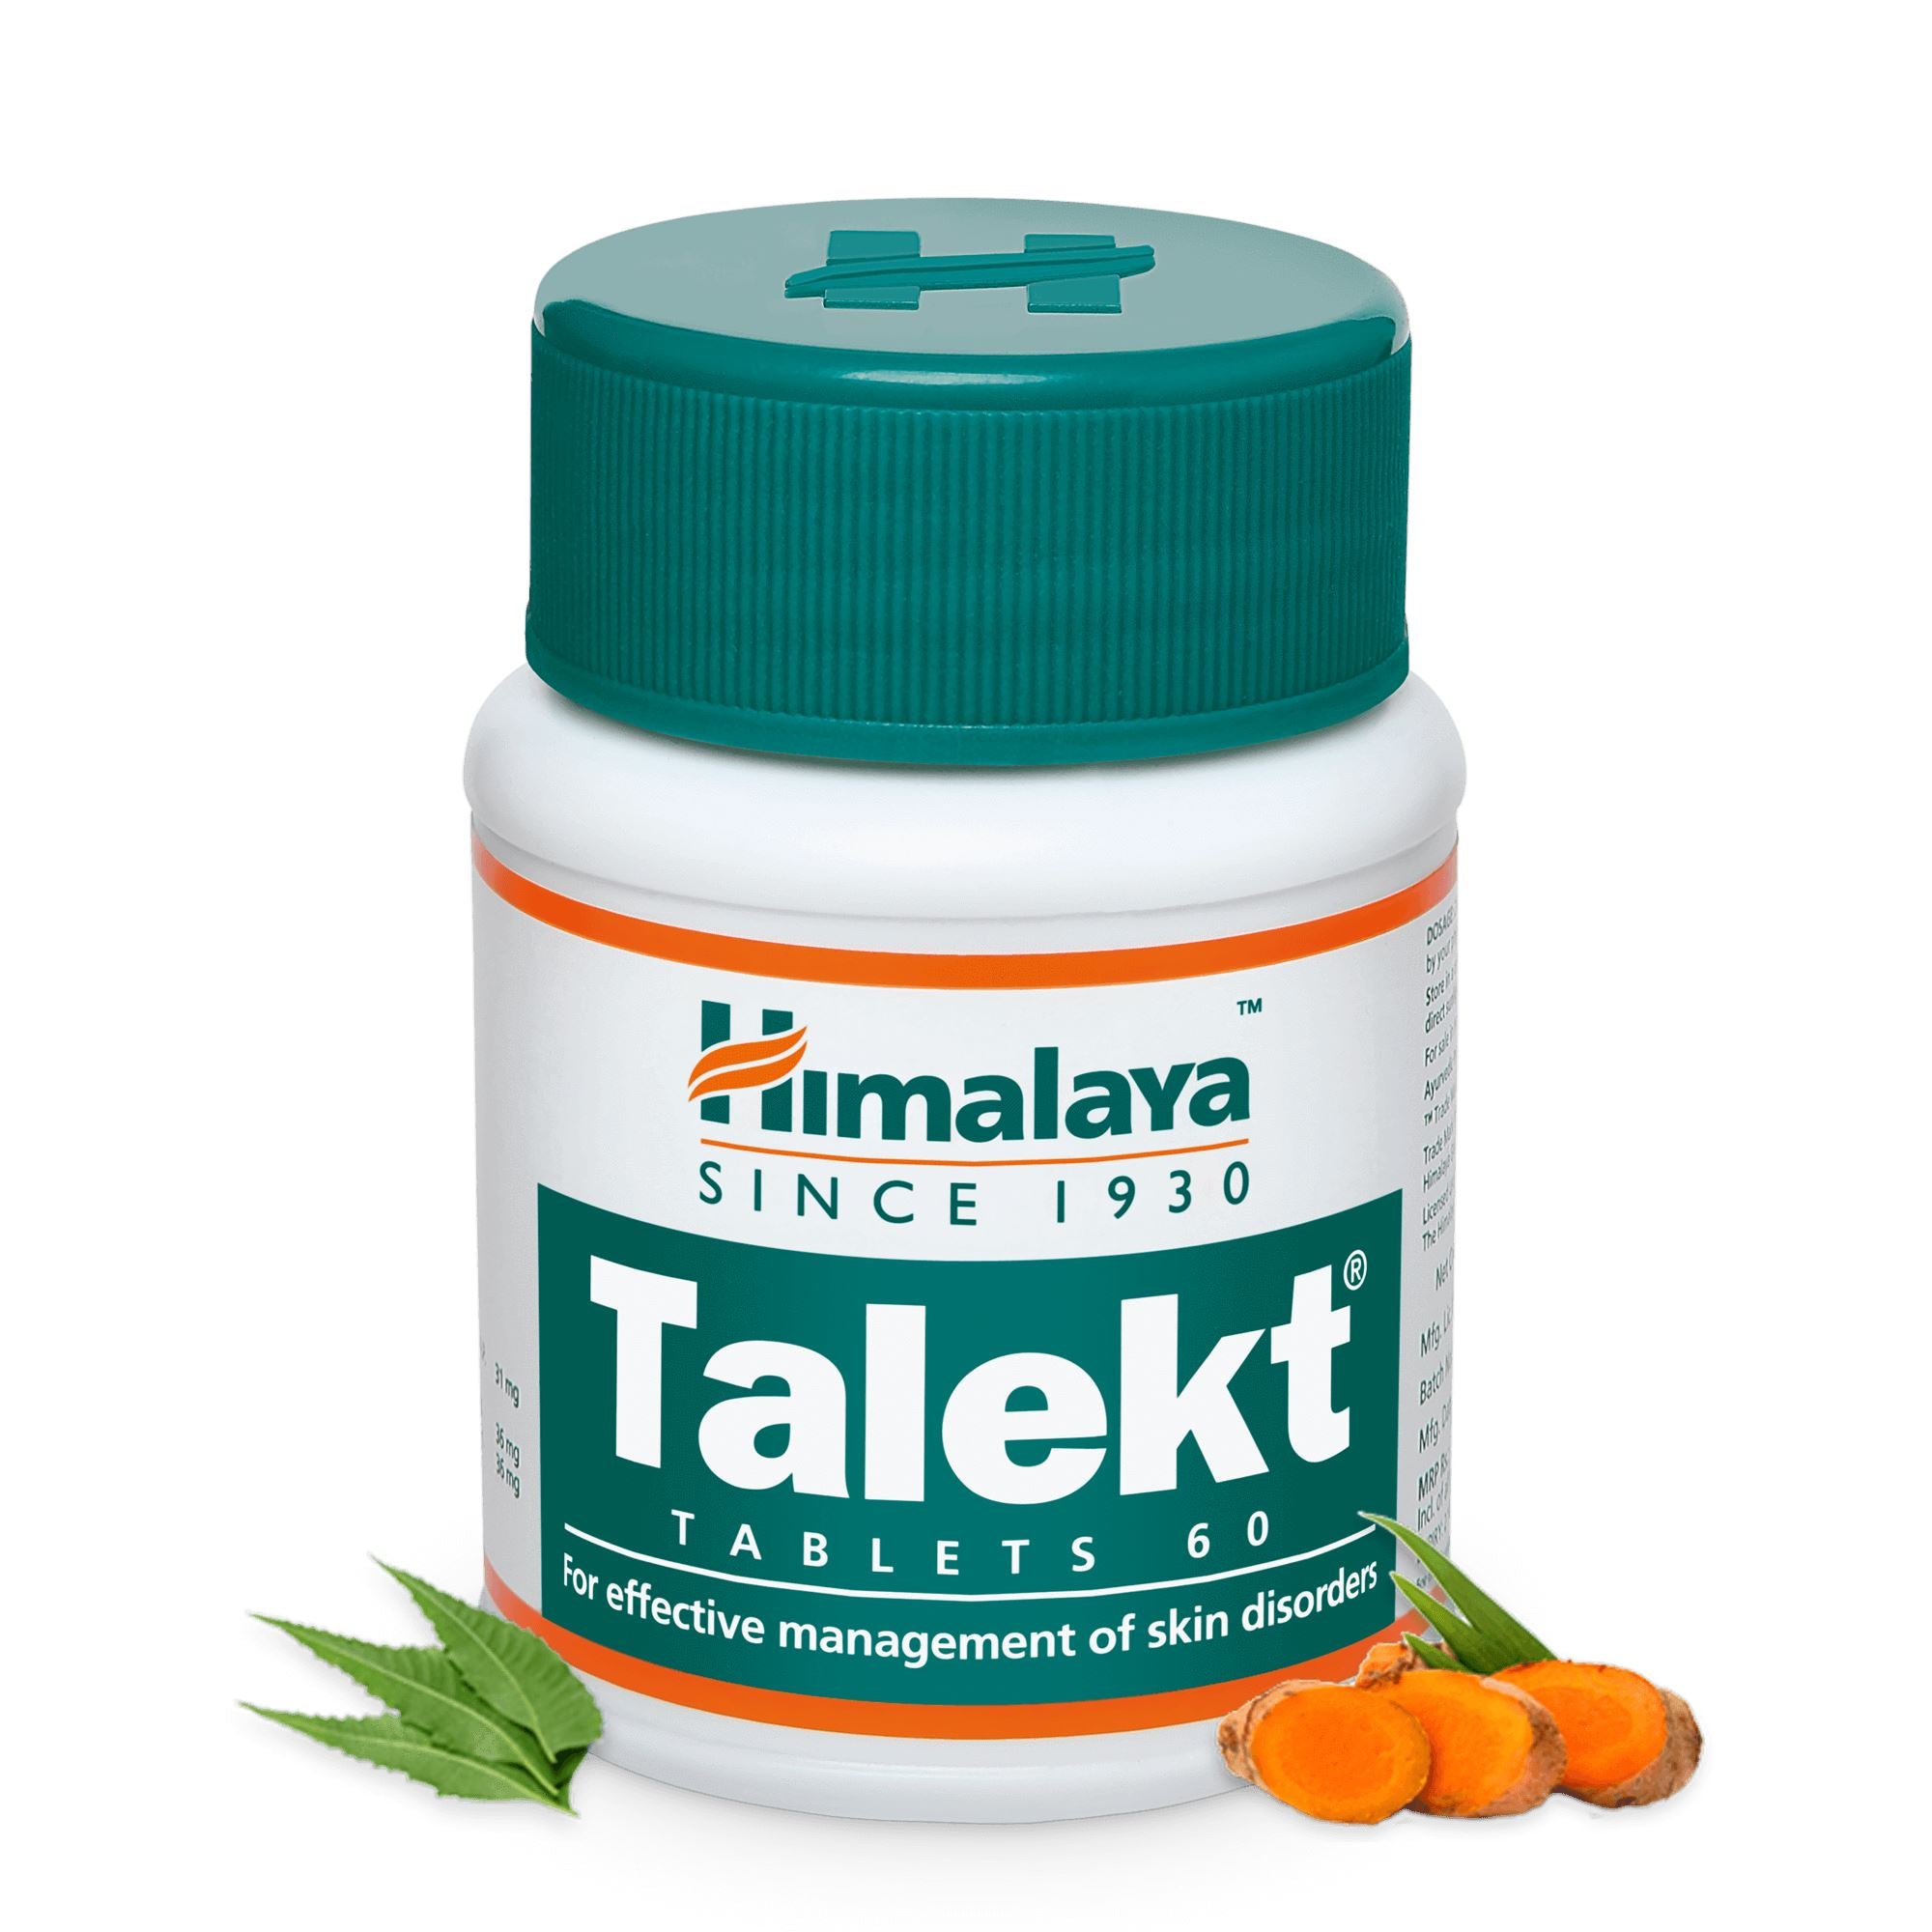 Himalaya Talekt - For effective management of skin disorders